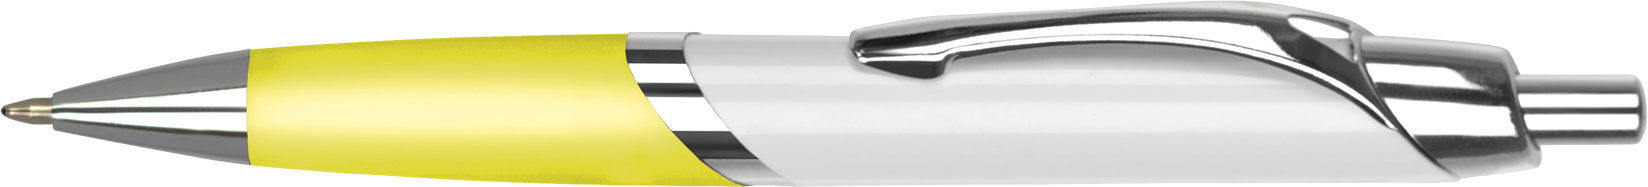 Spectrum Ballpen - Automotive Exhaust (1648x187)